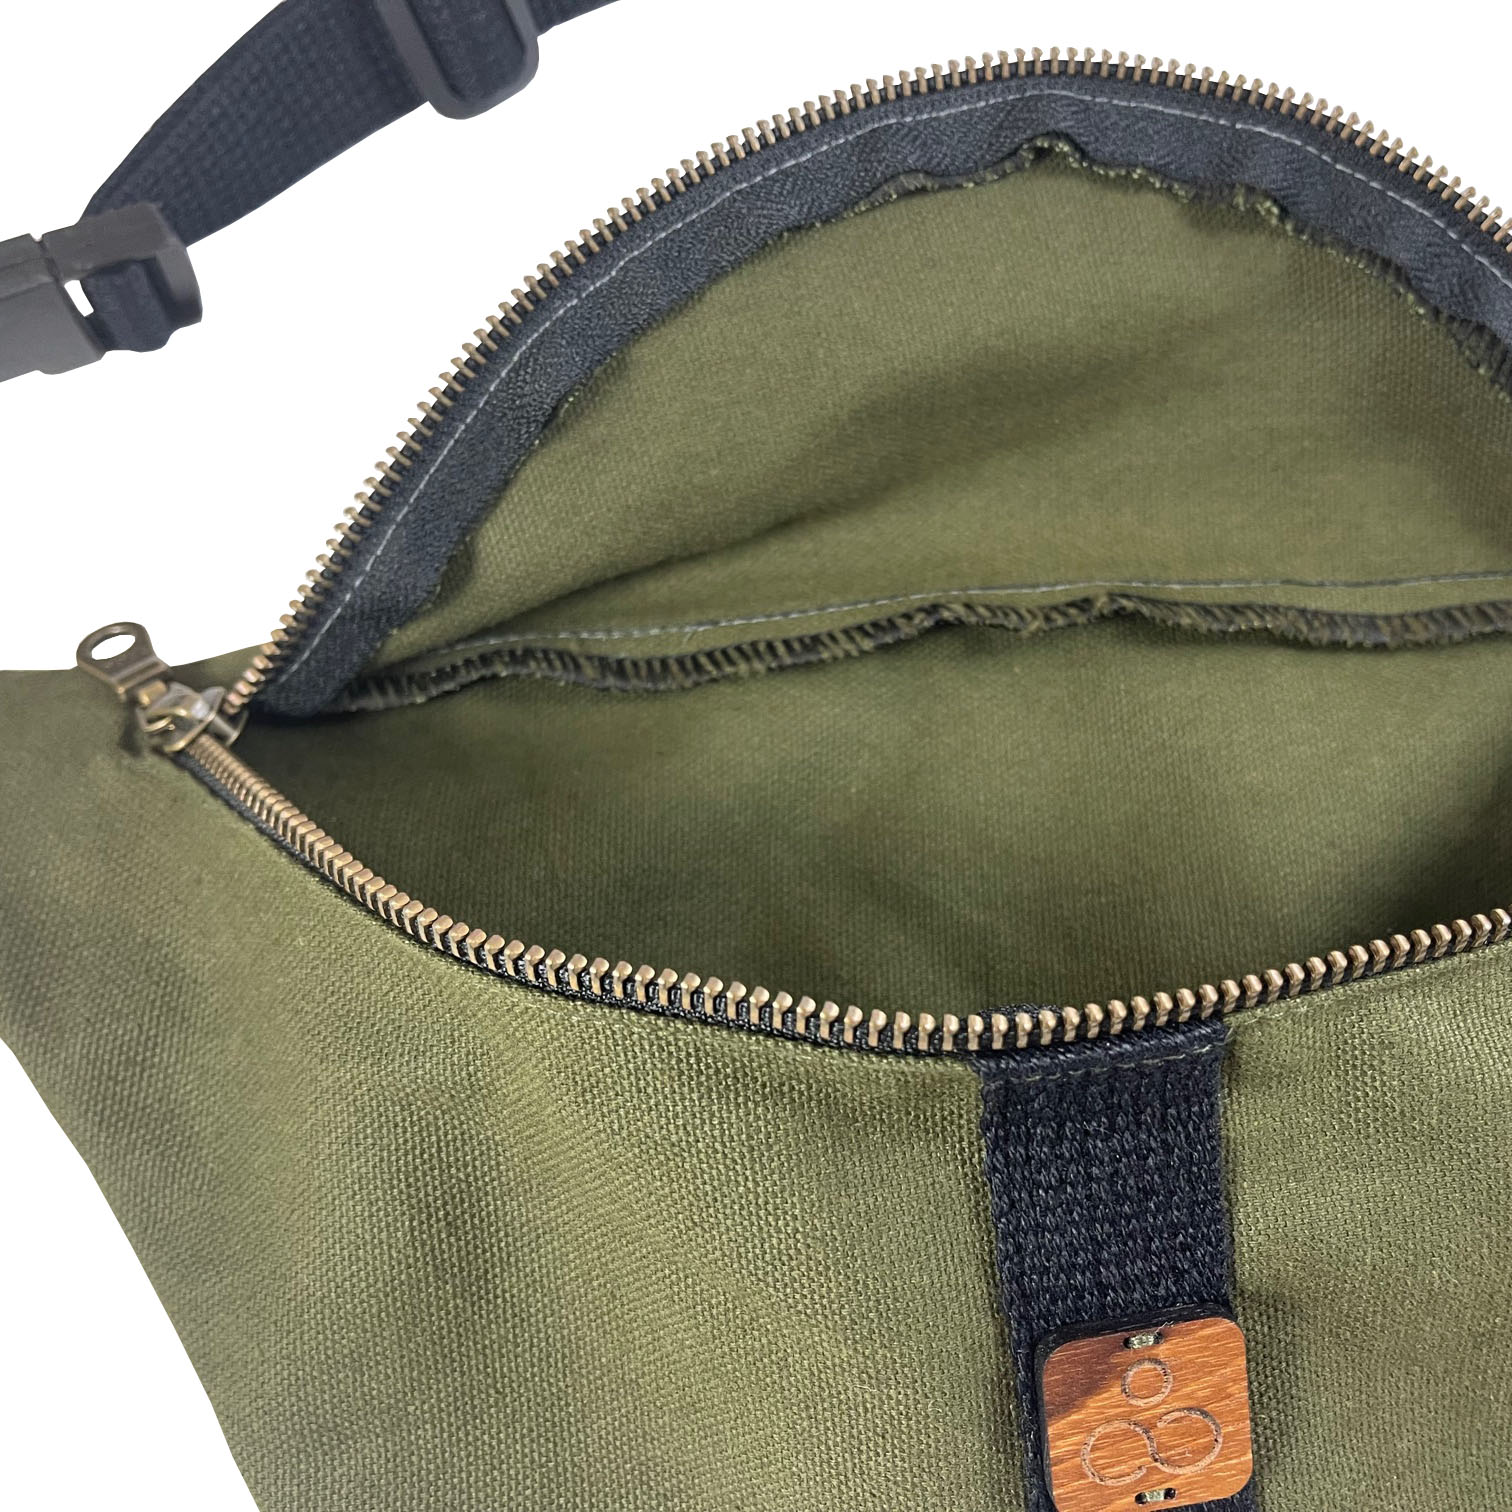 Details about   Yoga Bag Unisex Cross Body Shoulder Bag Handmade Yoga Mat Carrying Case 